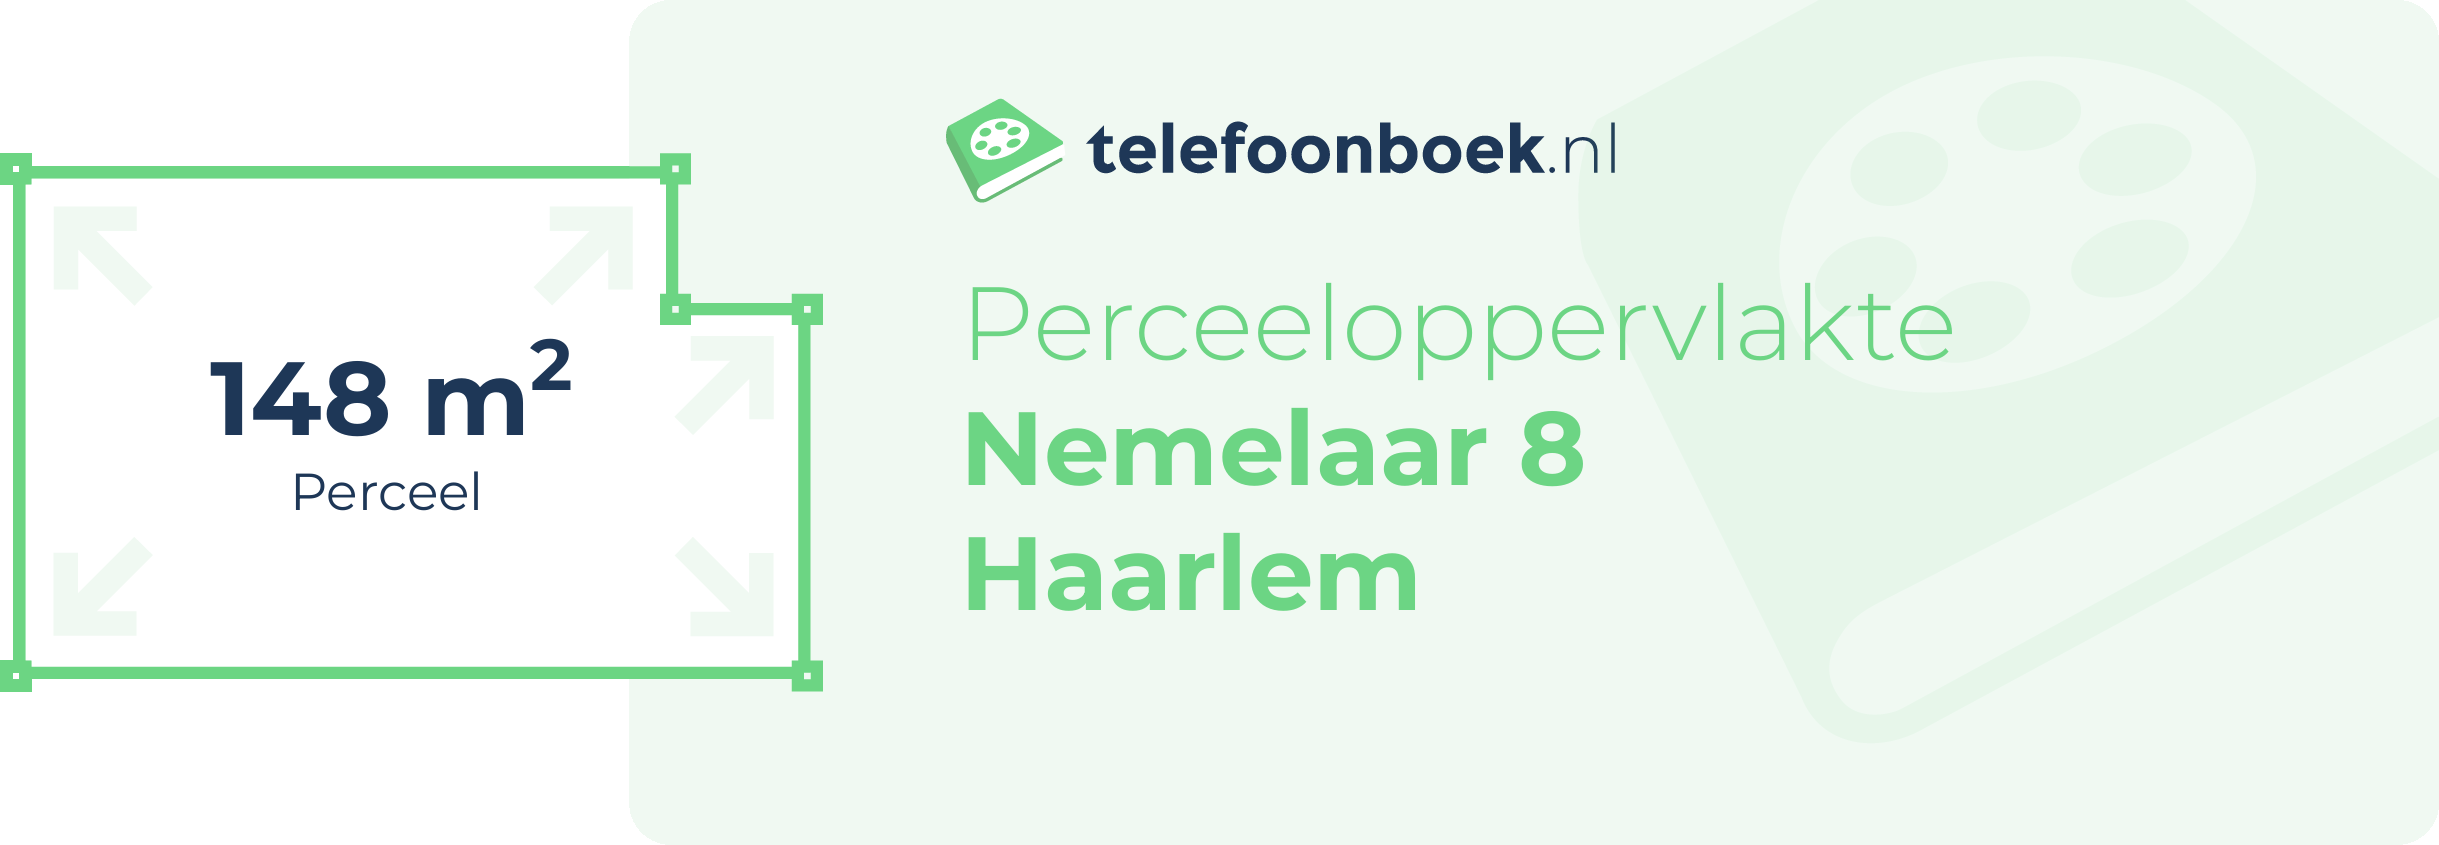 Perceeloppervlakte Nemelaar 8 Haarlem